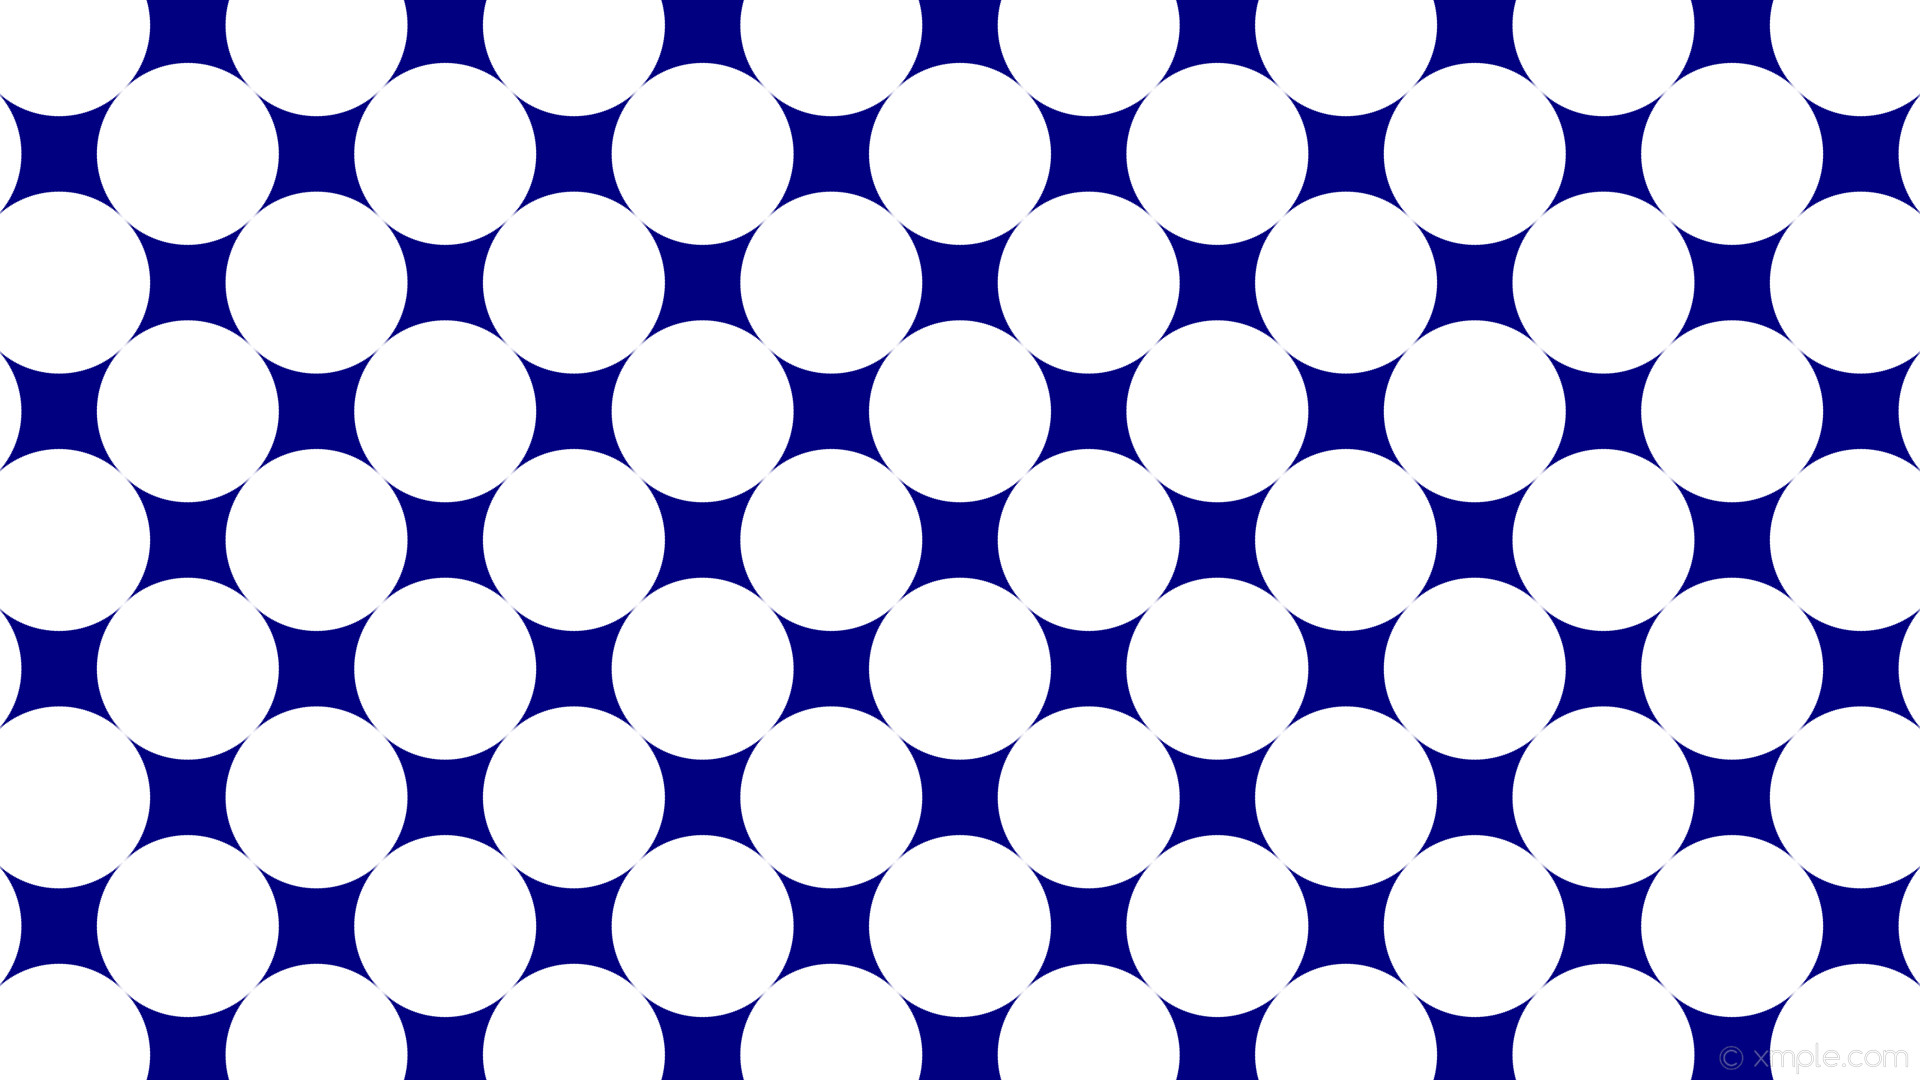 1920x1080 wallpaper dots spots blue polka white navy #000080 #ffffff 45Â° 182px 182px